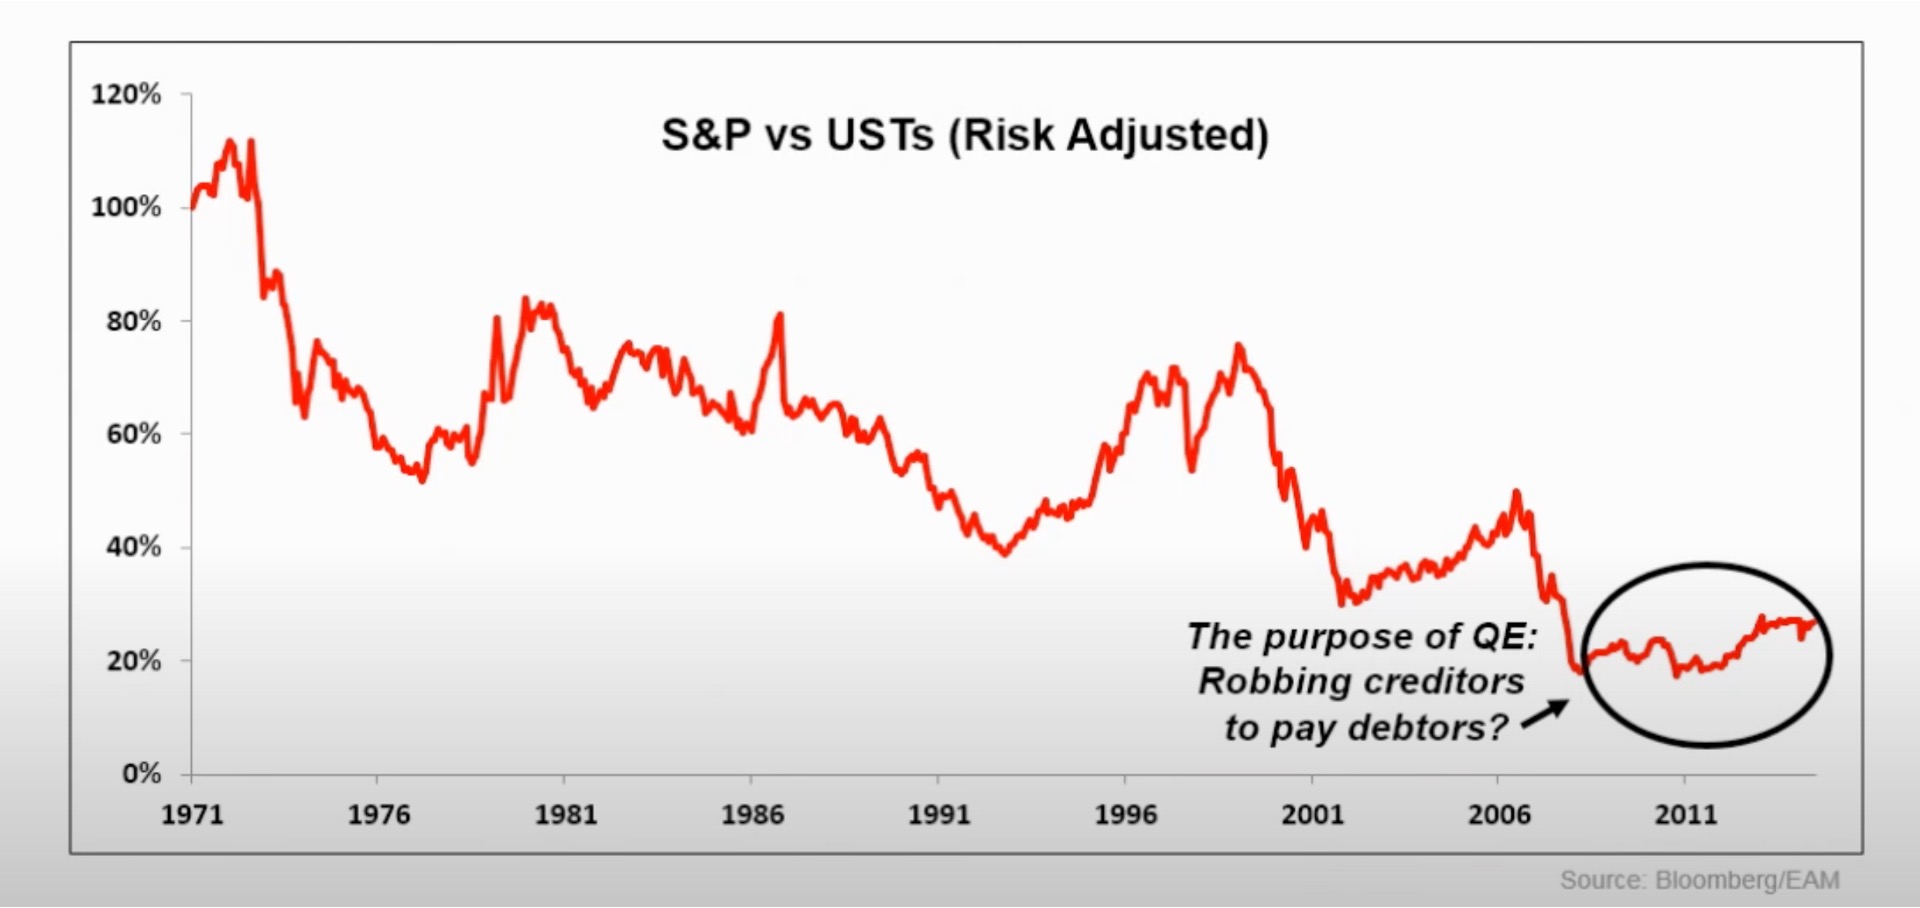 S&P vs USTs (Risk Adjusted)